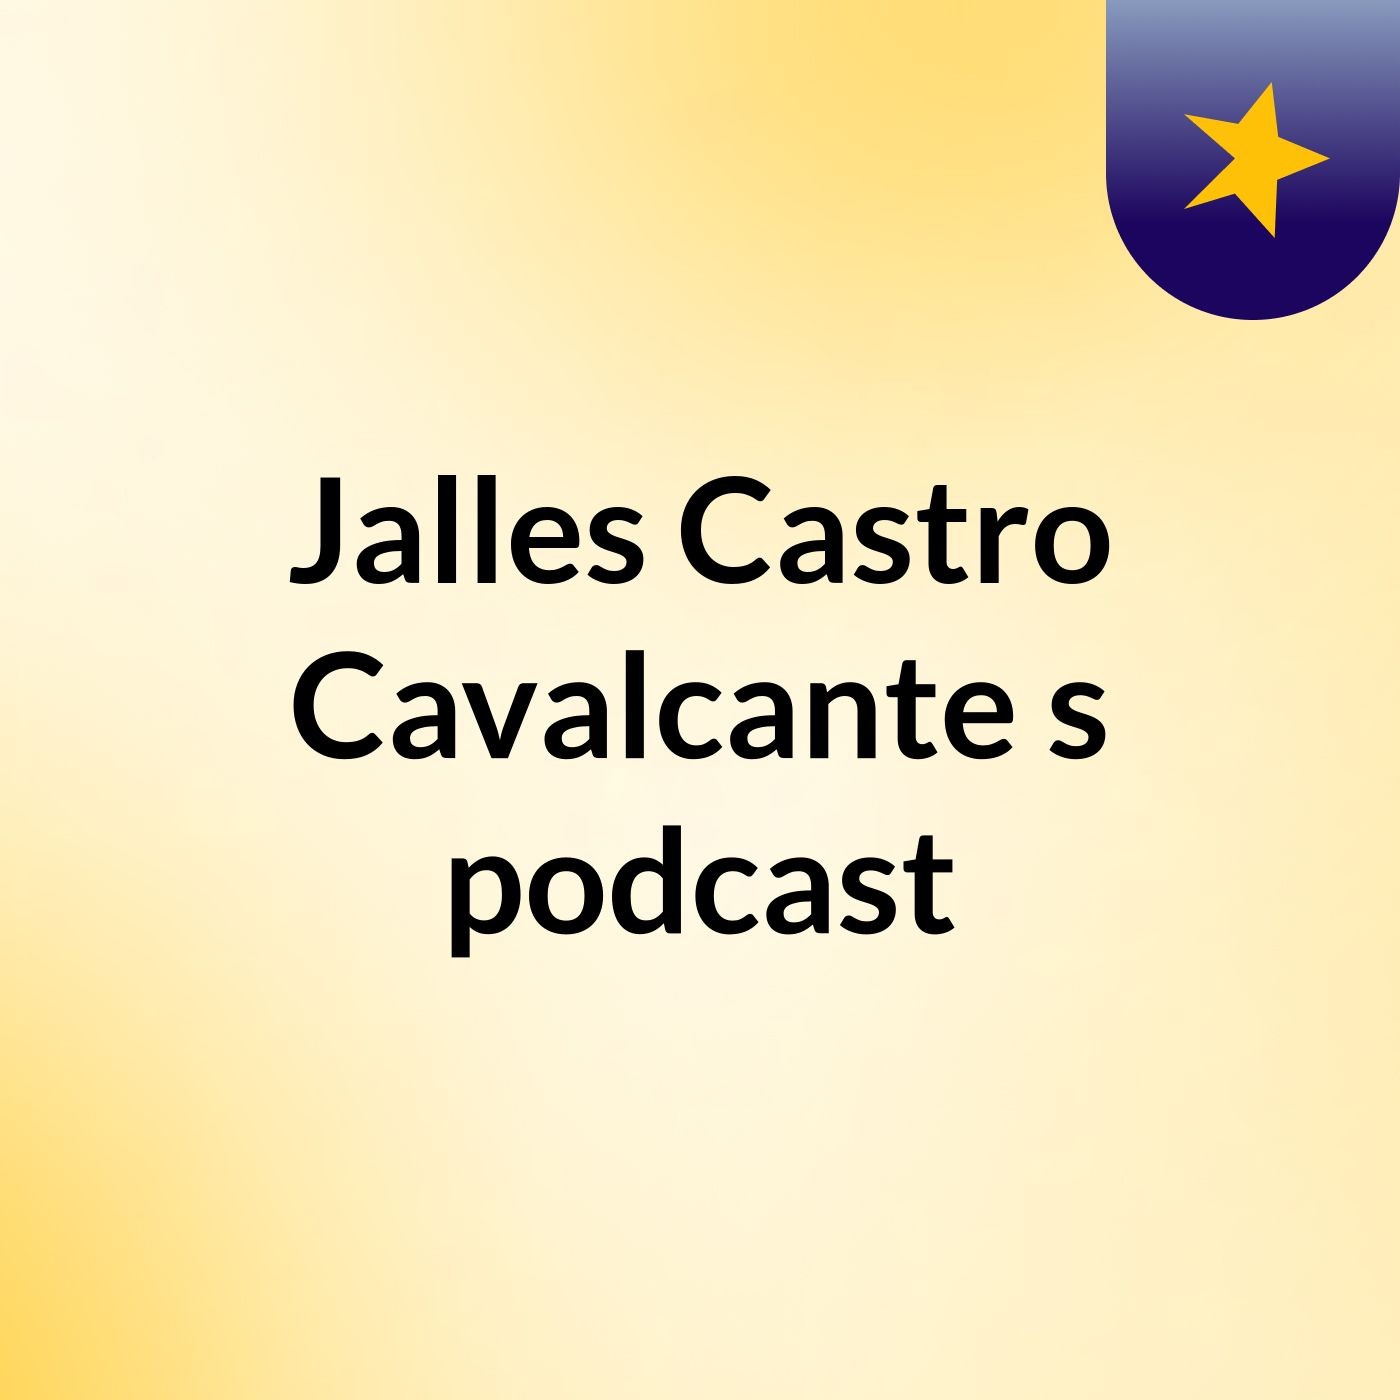 Jalles Castro Cavalcante's podcast